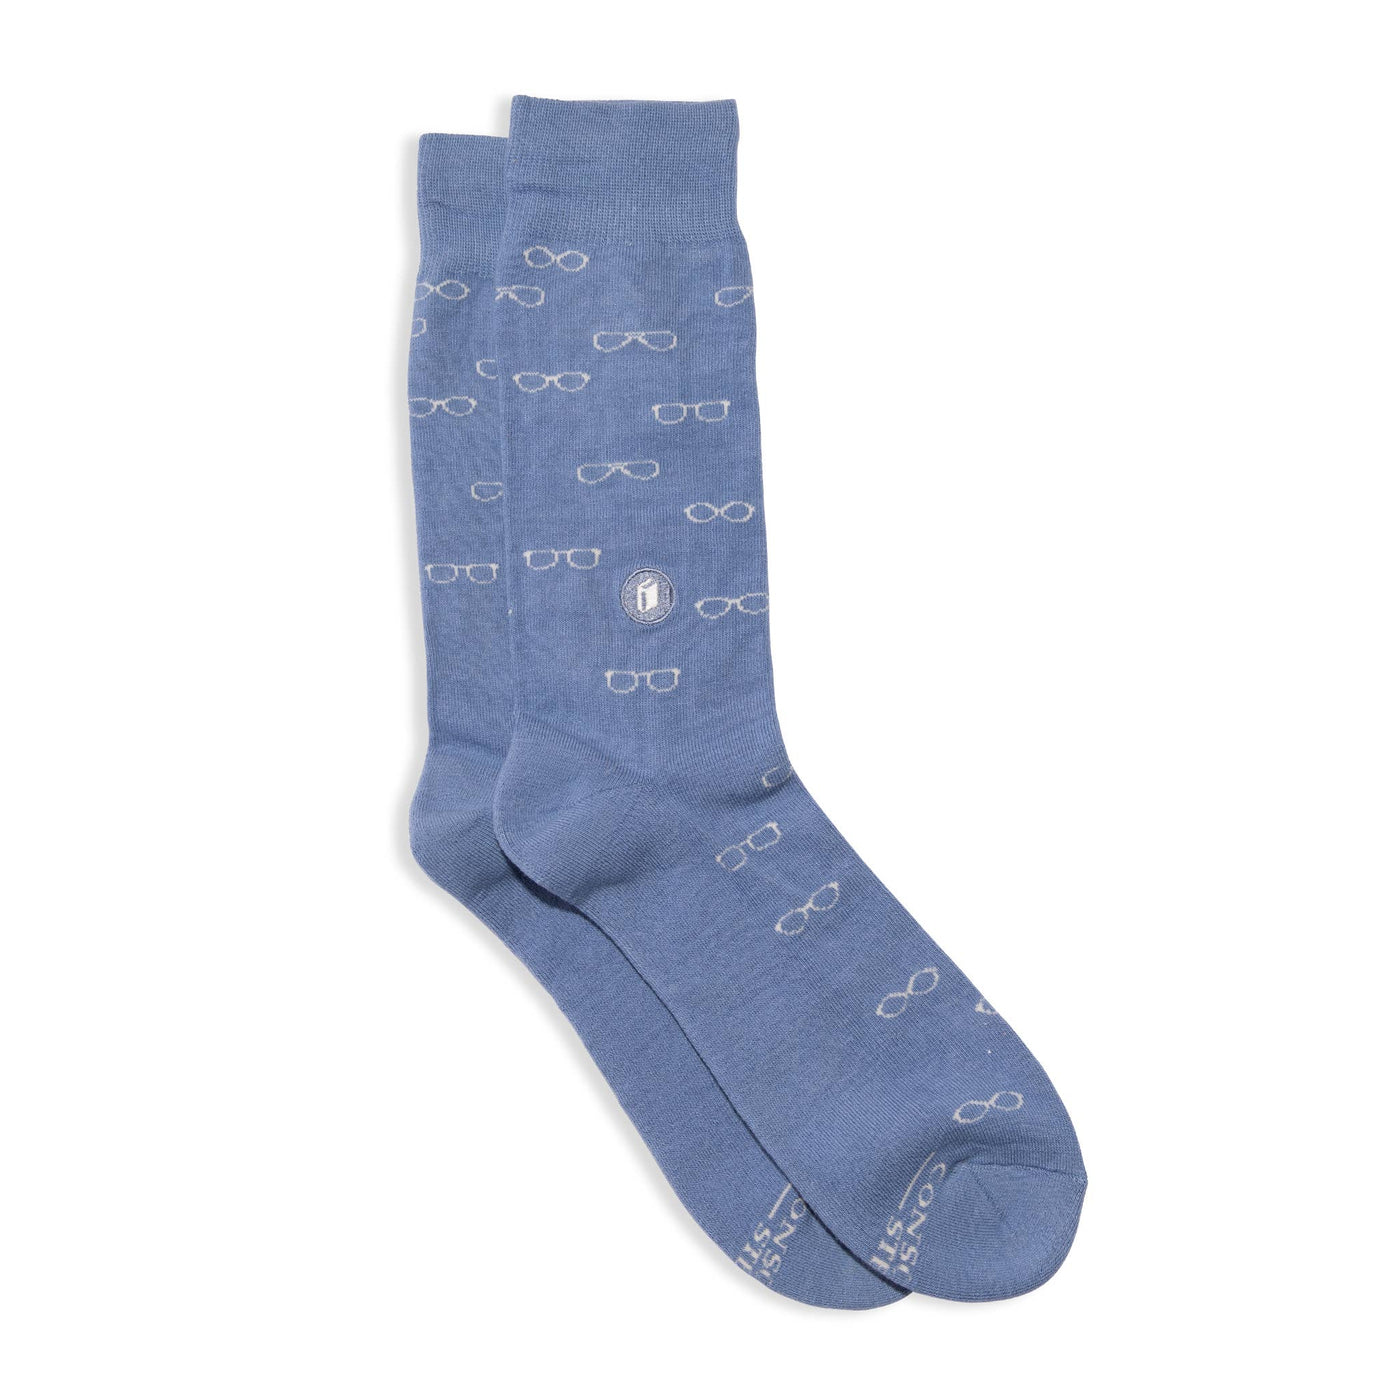 Socks that Give Books (Blue Glasses)